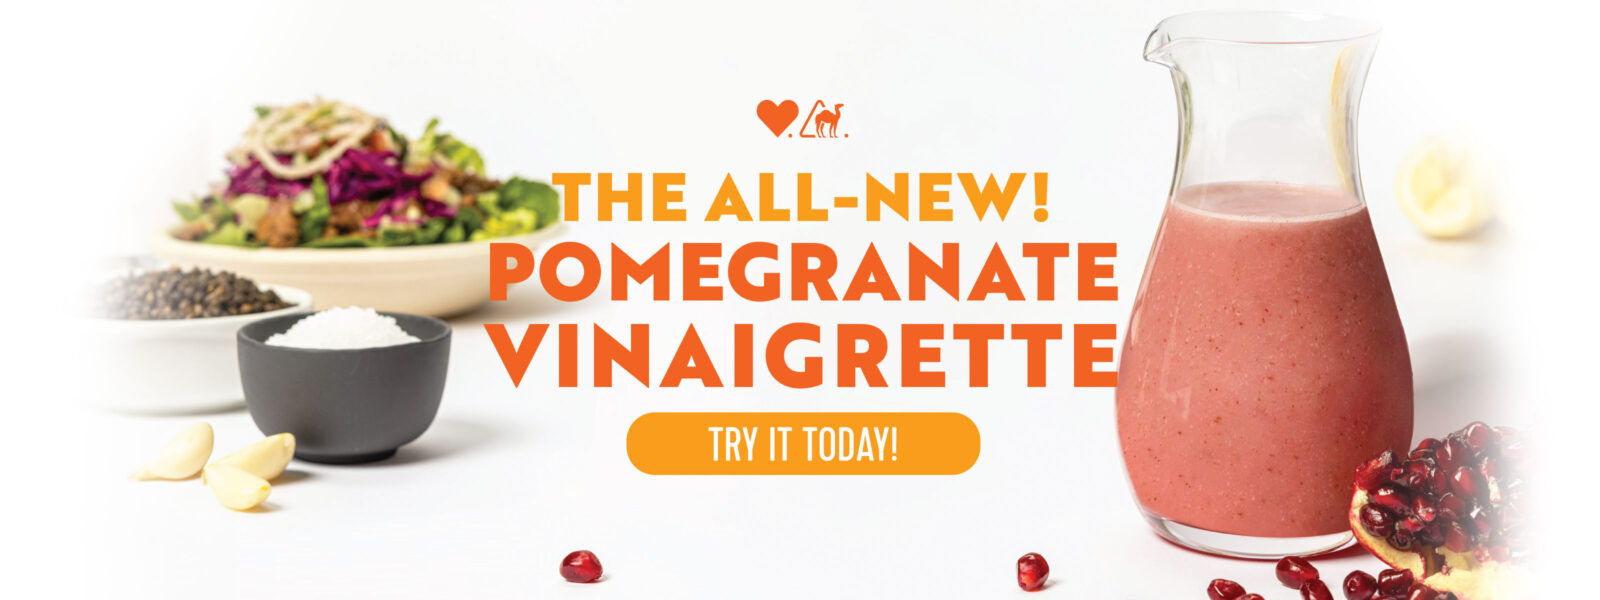 Try the ALL-NEW Pomegranate Vinaigrette